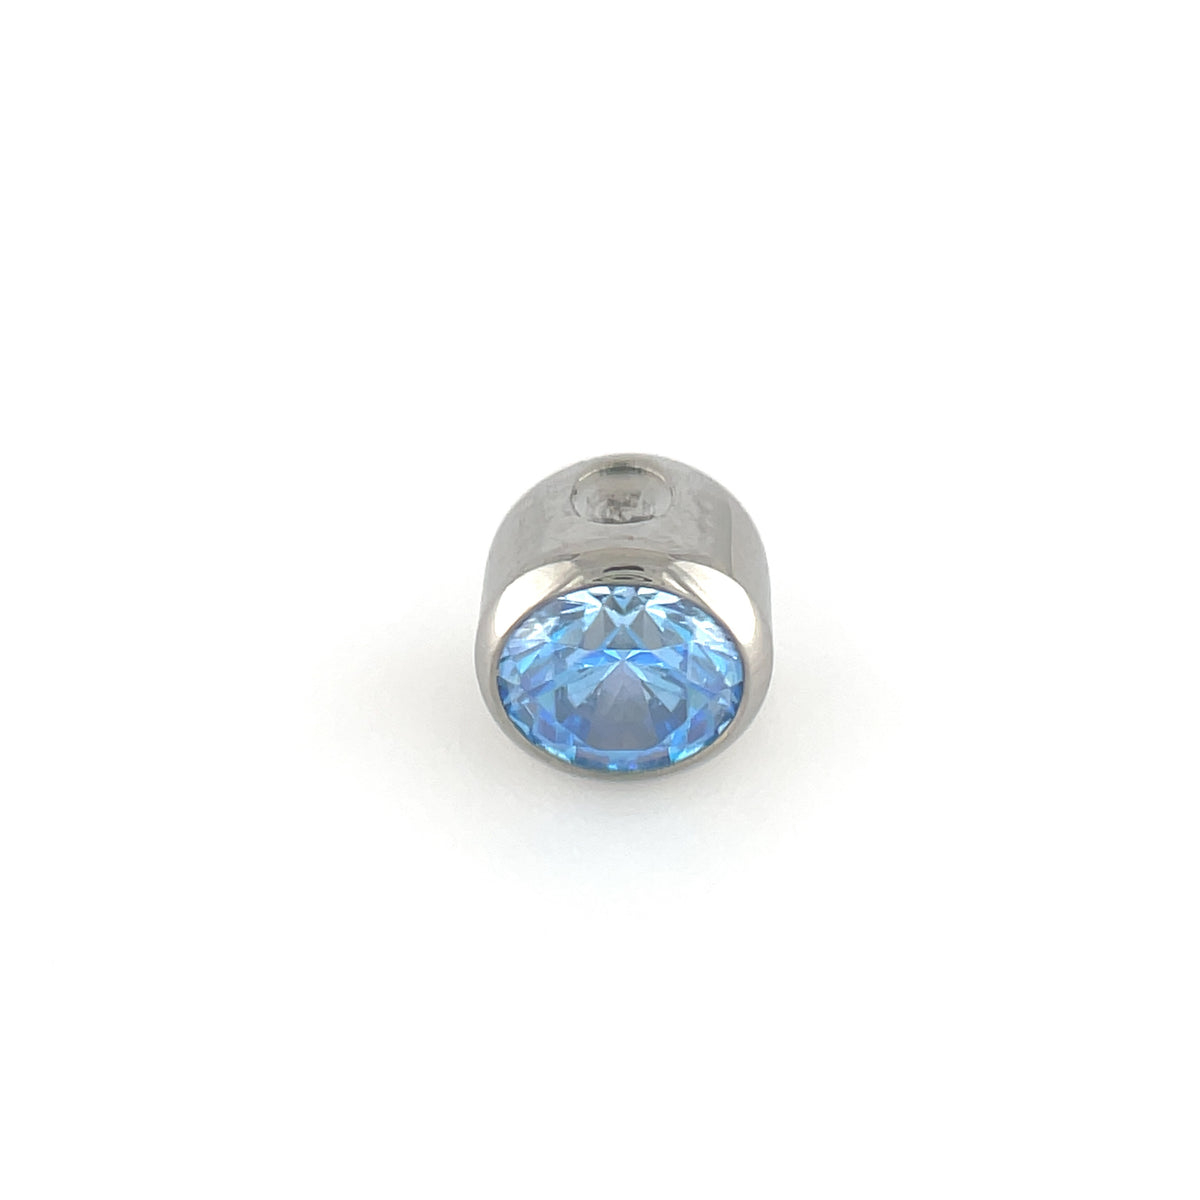 Industrial Strength Titanium Arctic Blue CZ Gem Captive Bead Ring